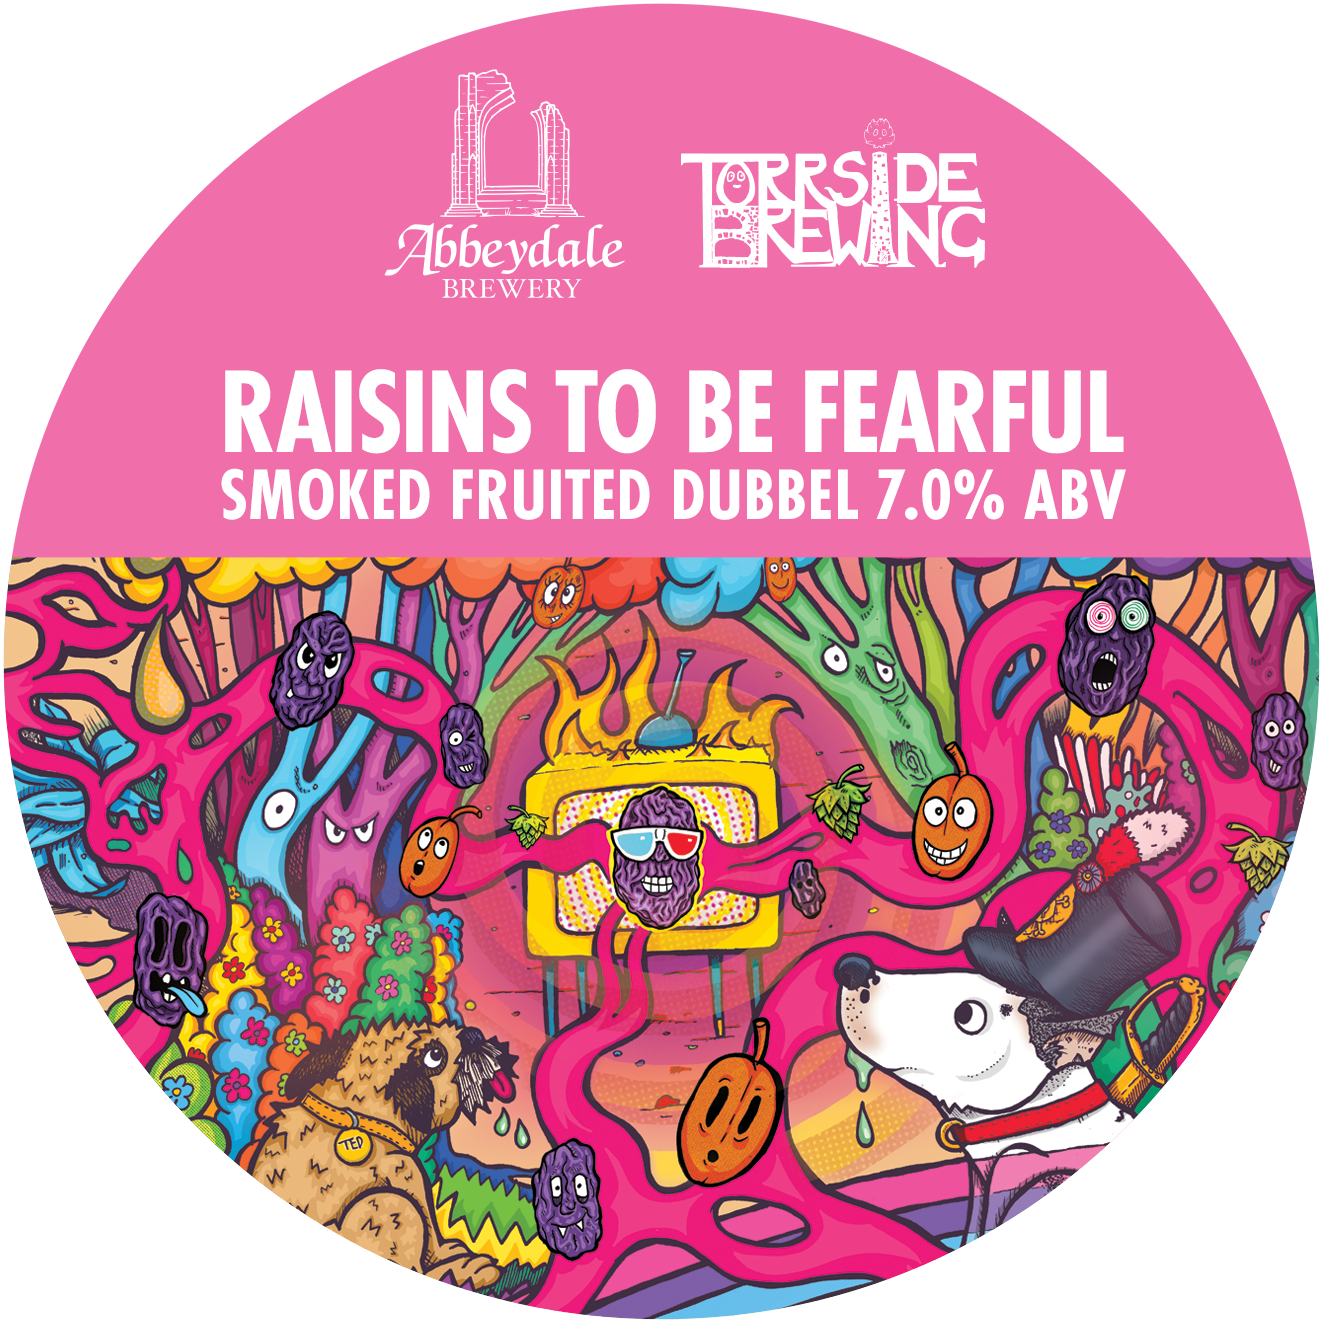 Craft Beer Label Illustration - Abbeydale Brewery x Torrside Brewery - Raisins to be Fearful - Fruited Dubbel Keg Artwork